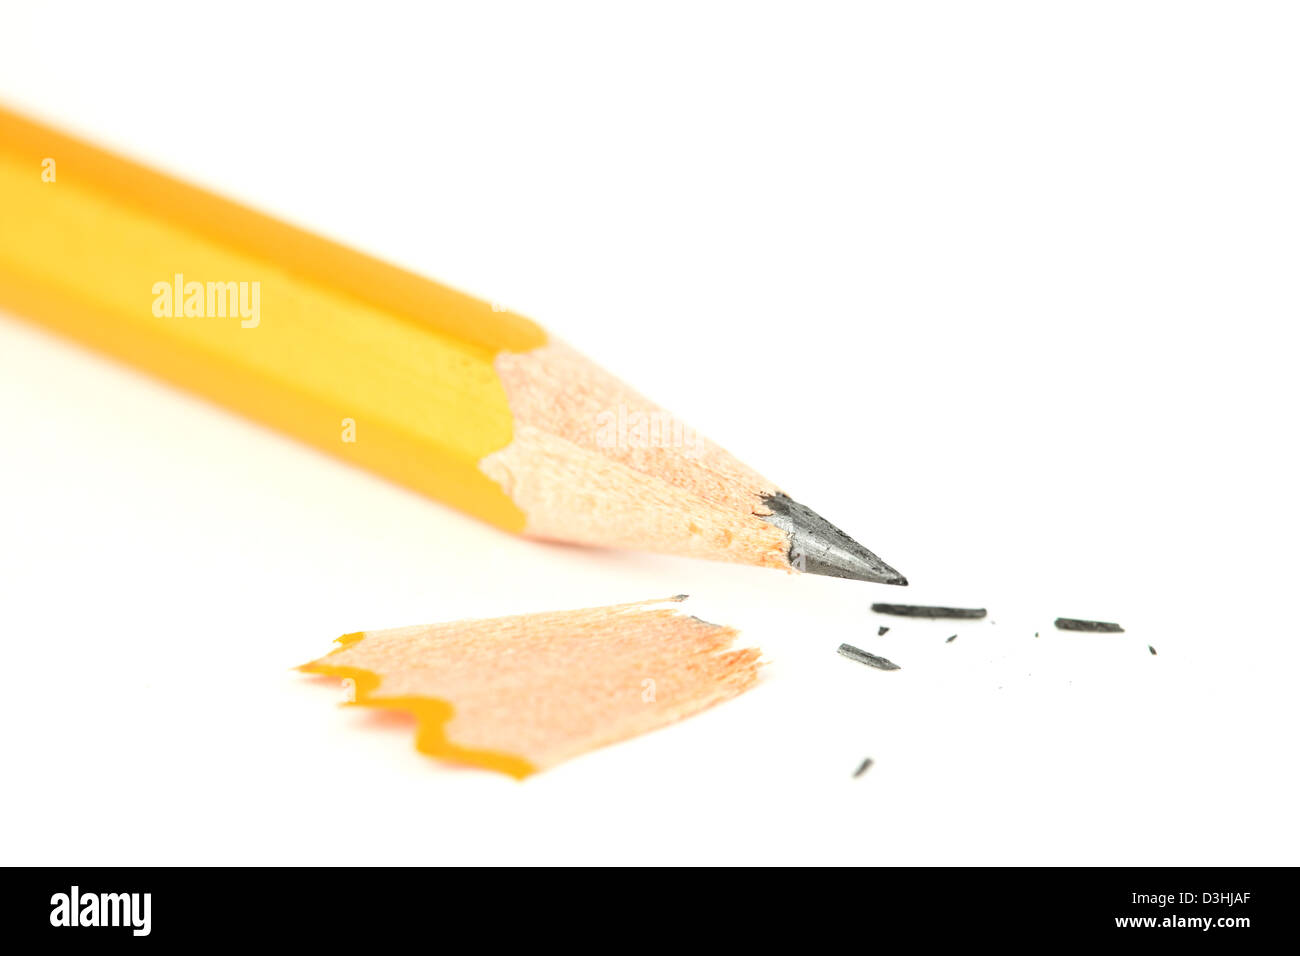 Sharpened pencil closeup Stock Photo